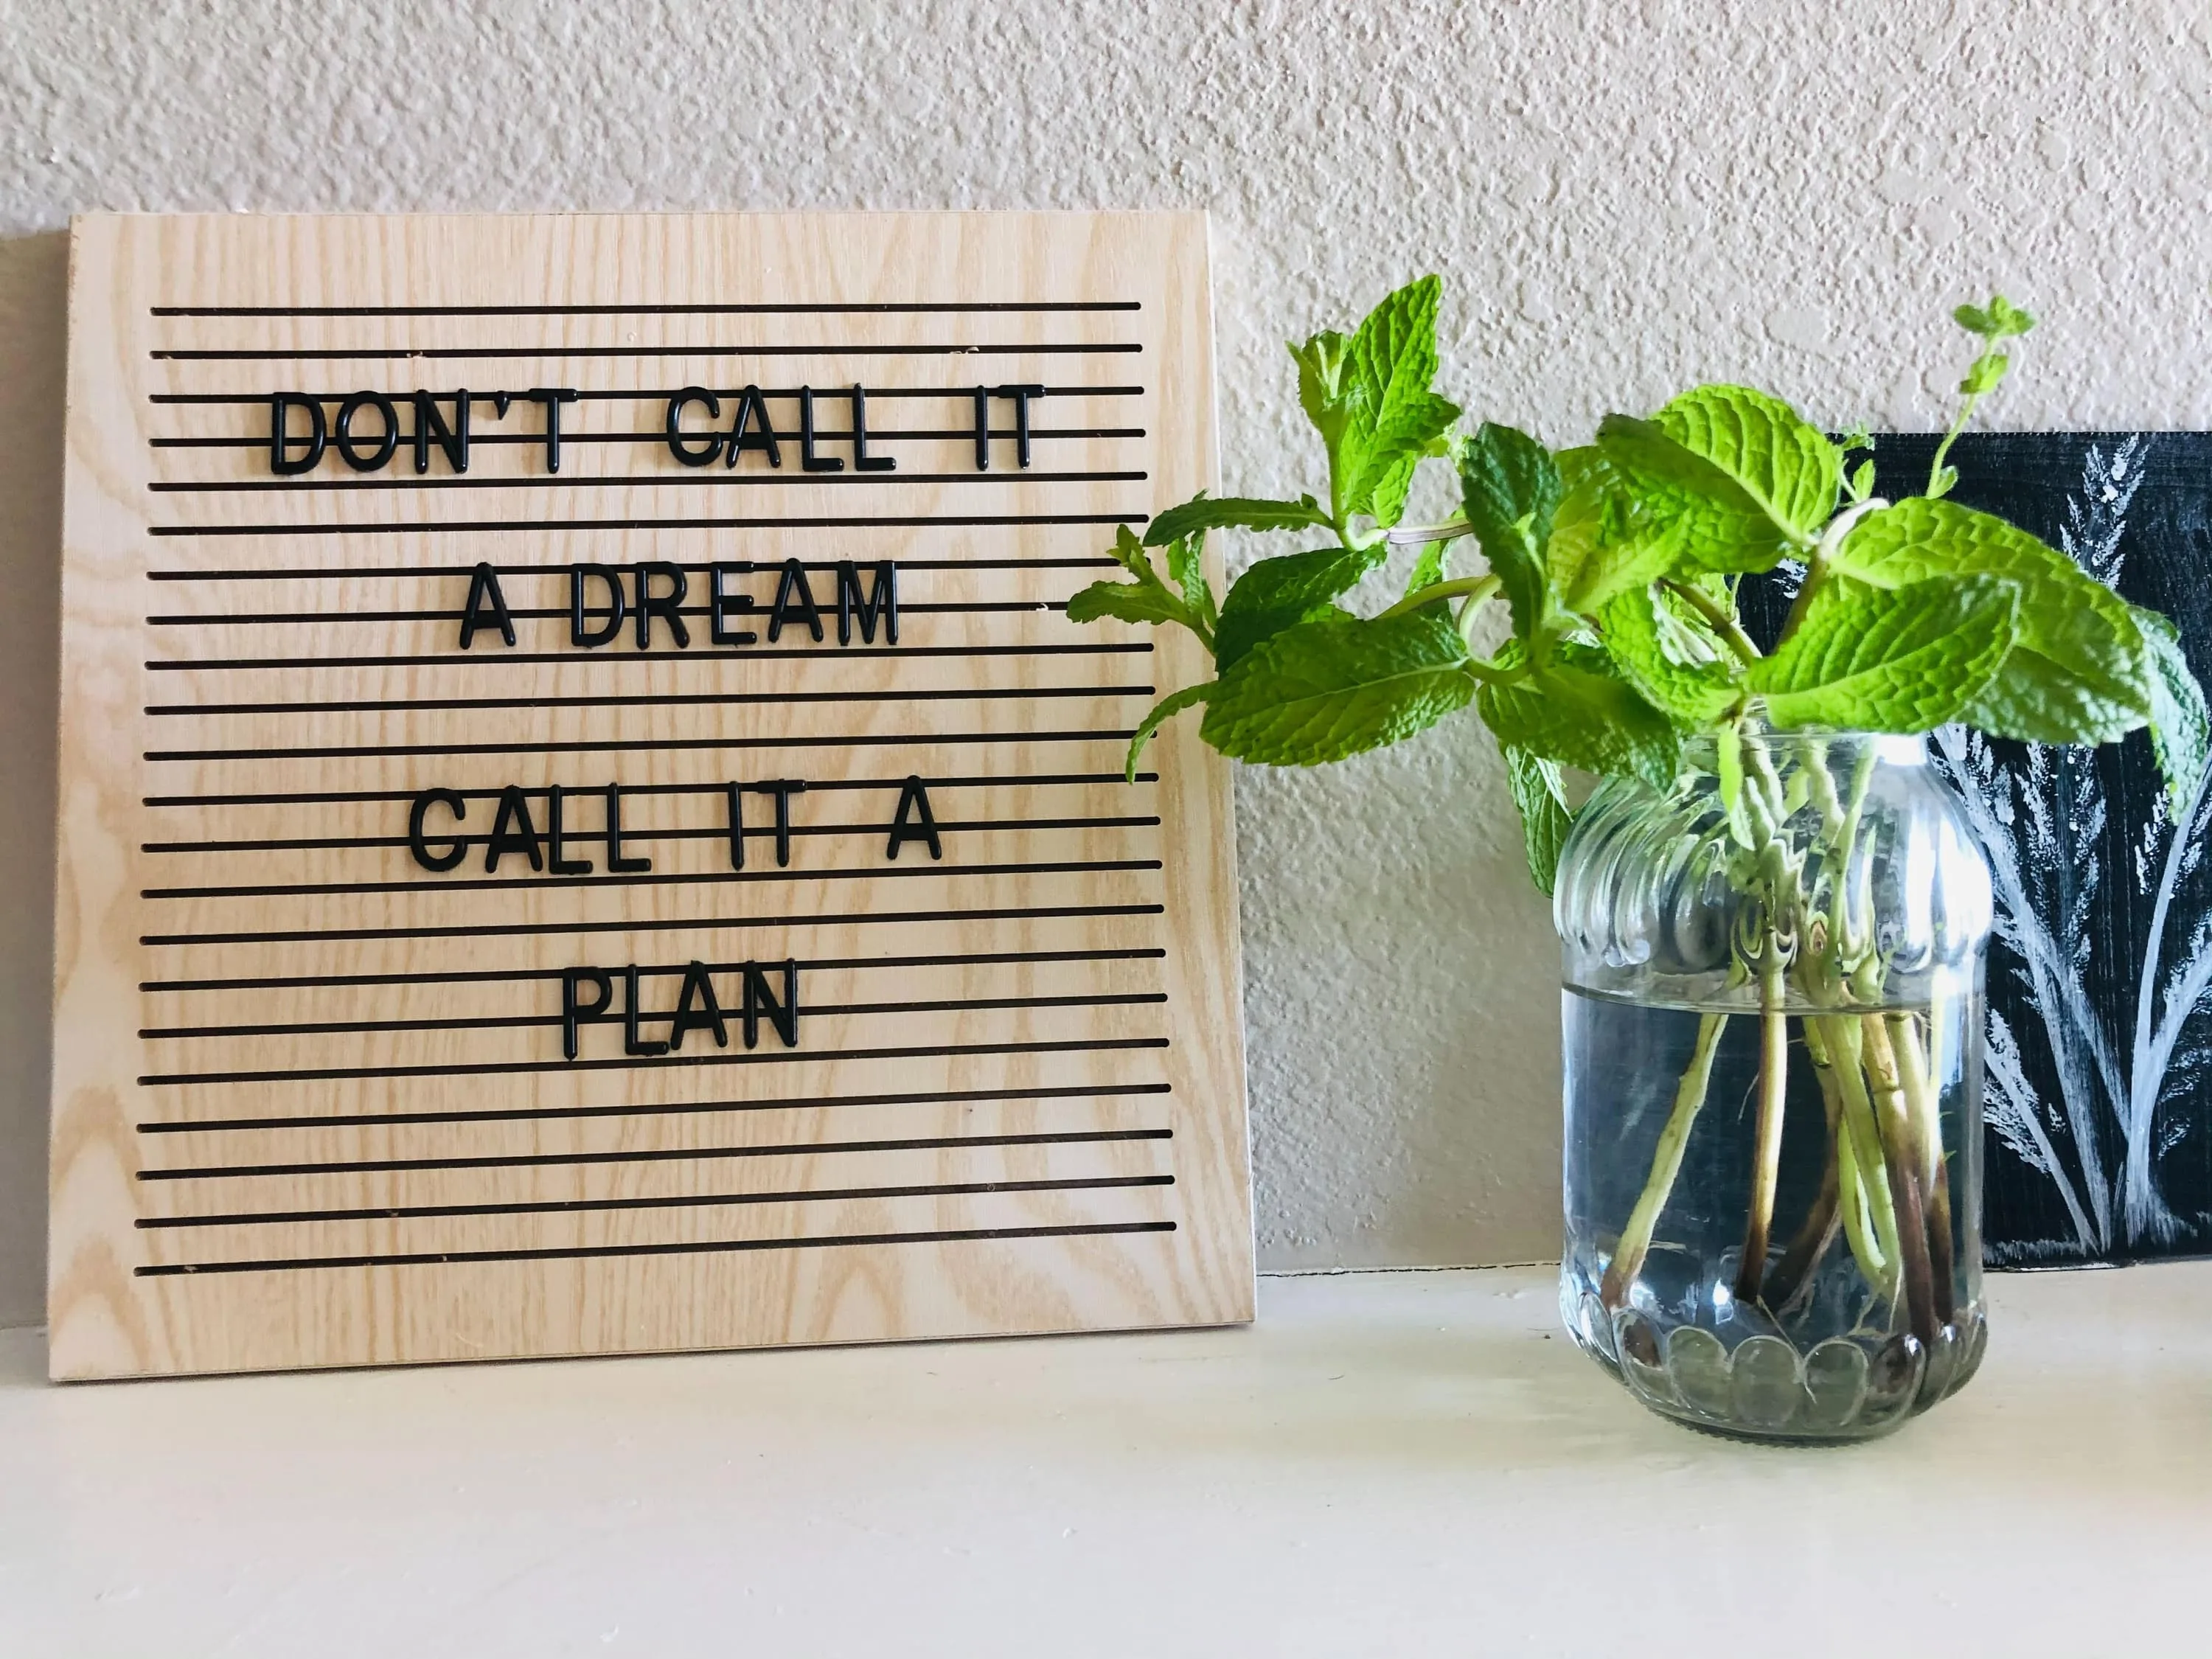 Don't Call It A Dream - Call It A Plan